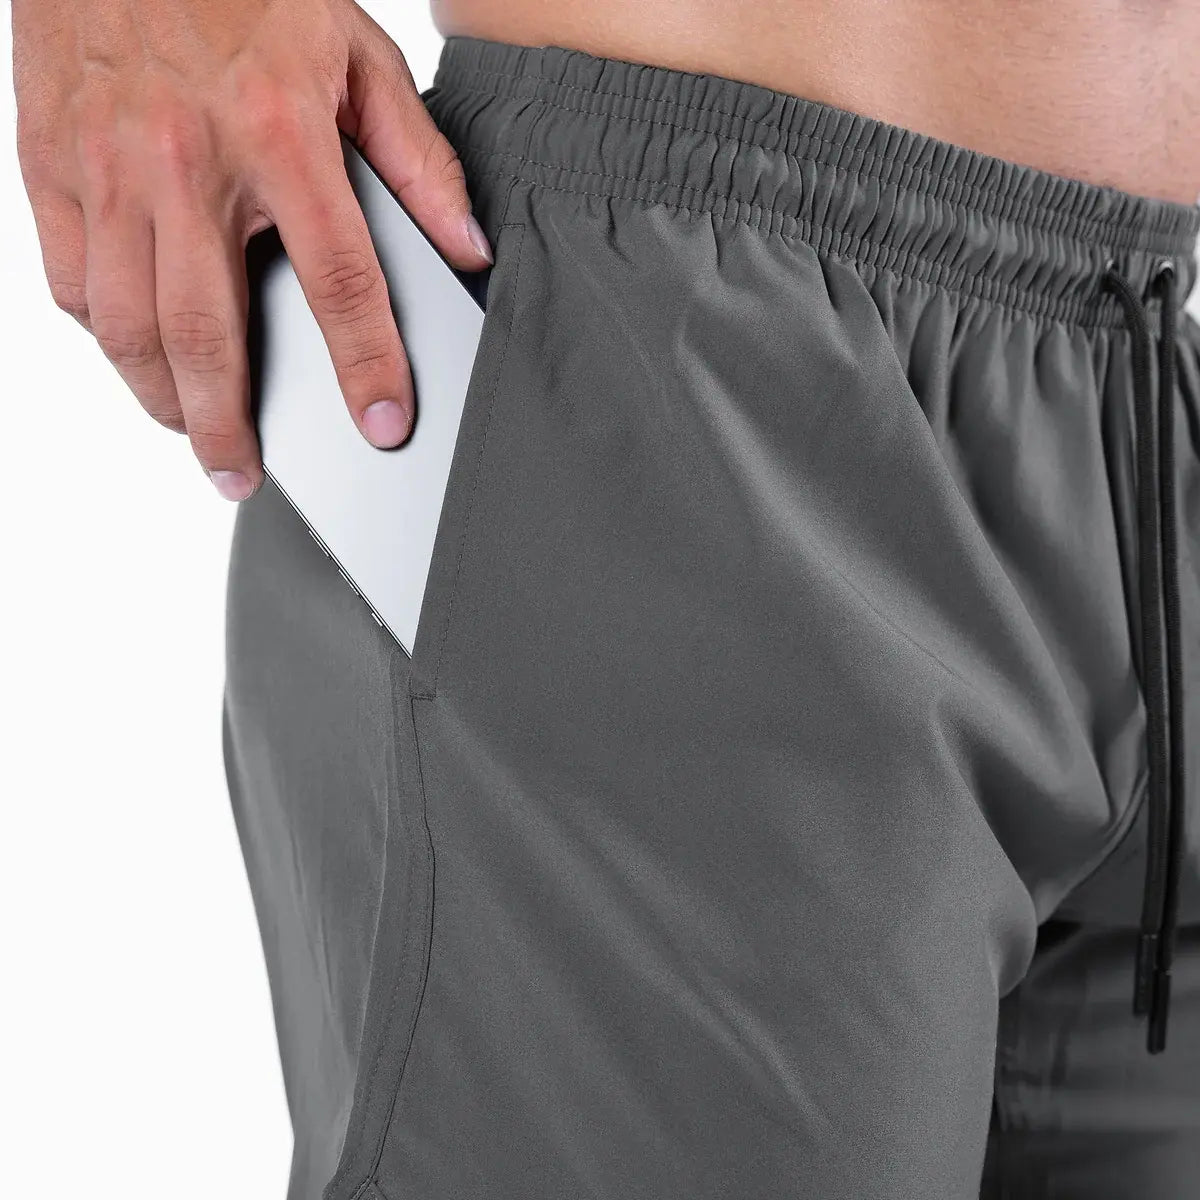 gr training shorts gray cropped pocket shot